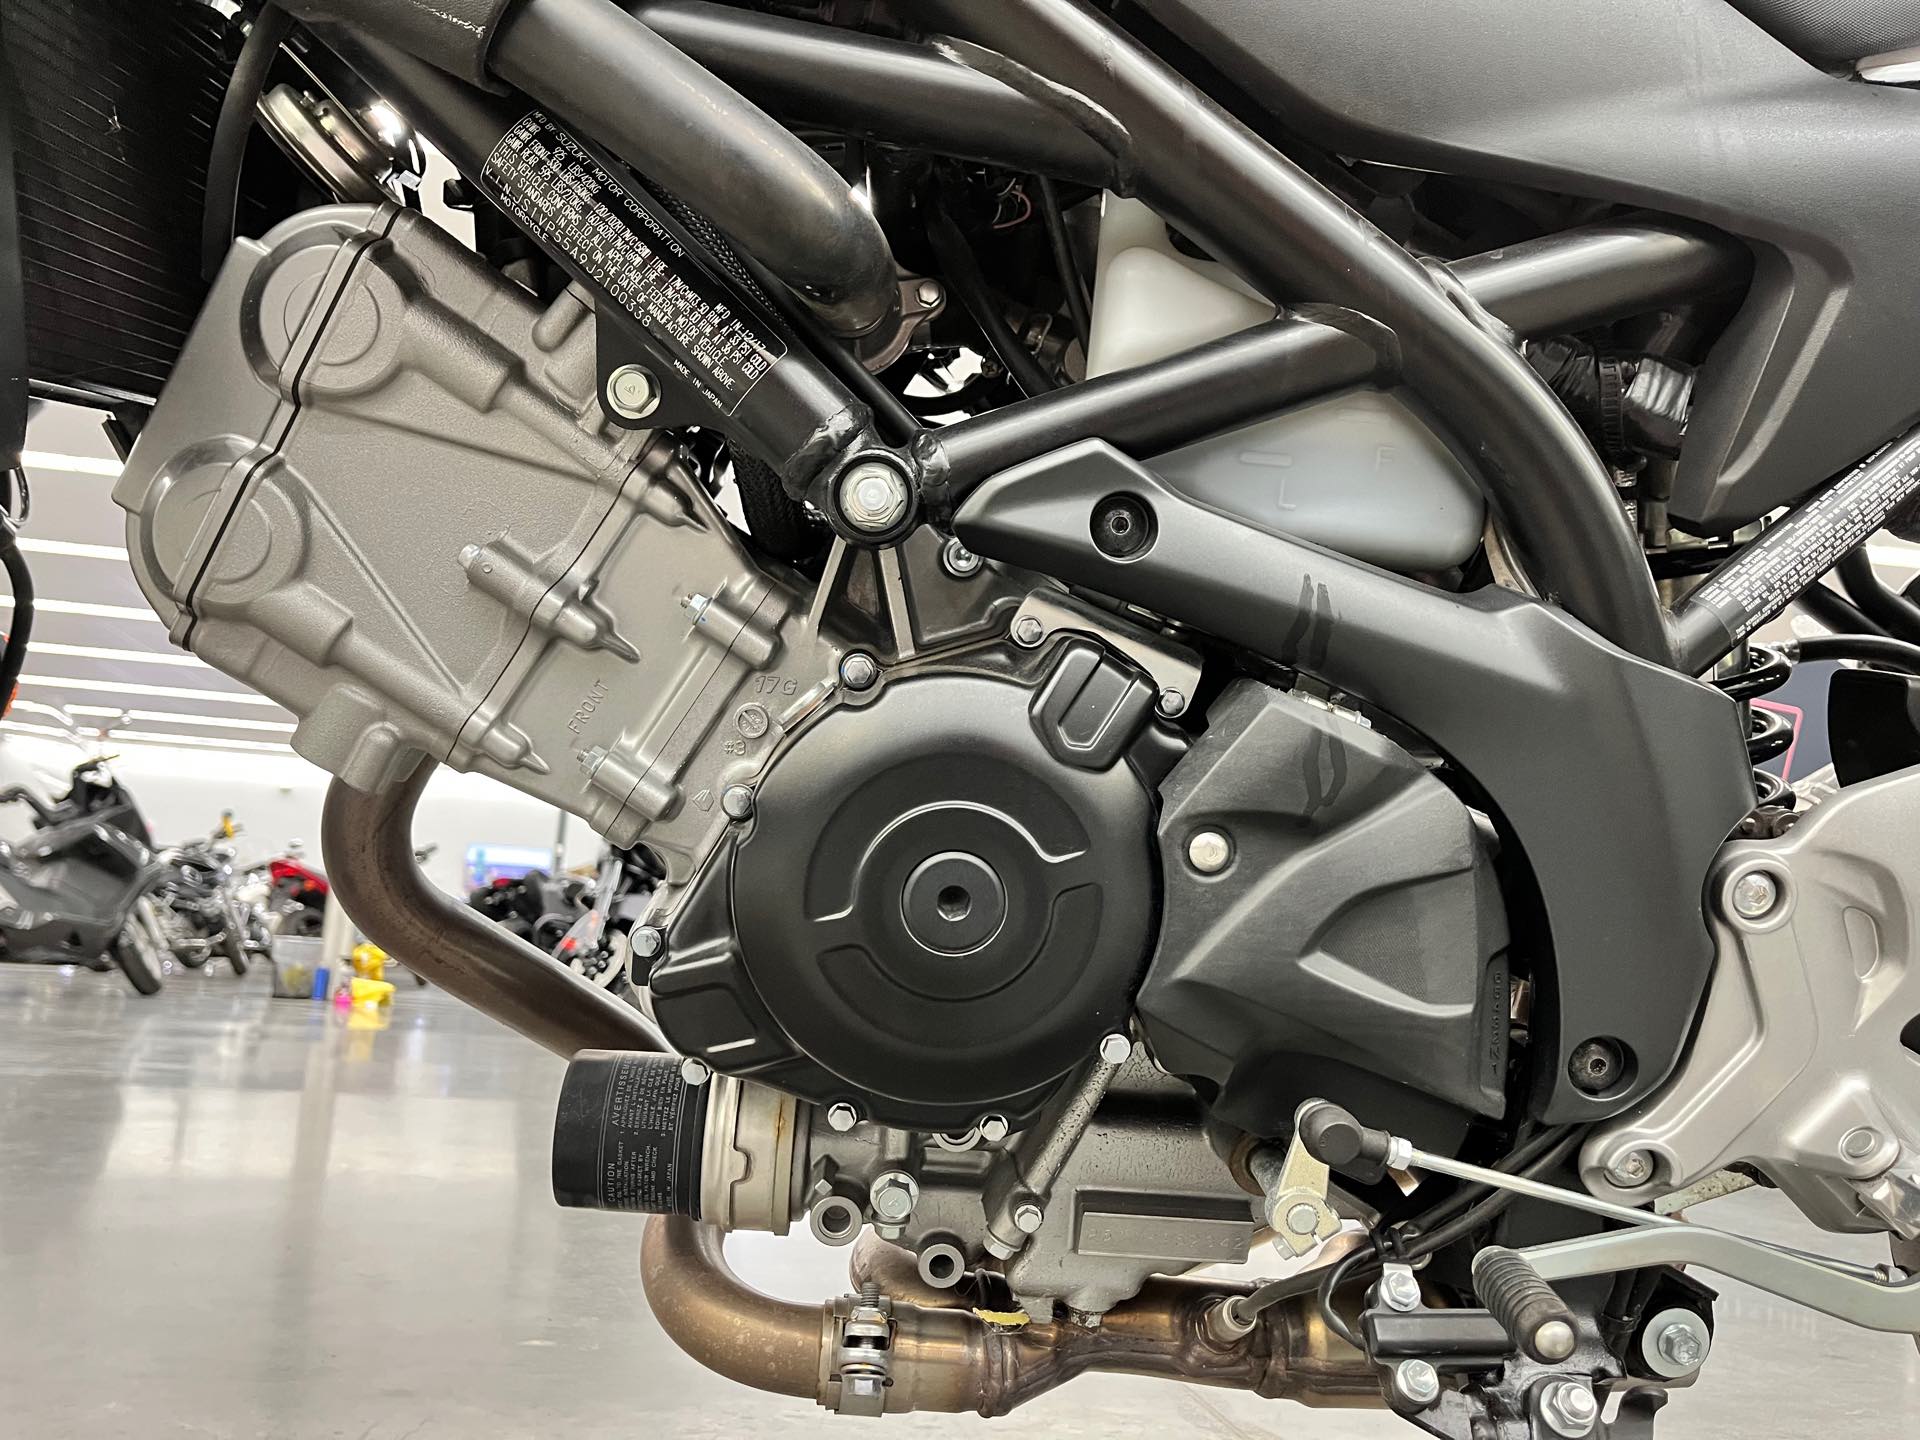 2018 Suzuki SV 650 at Aces Motorcycles - Denver